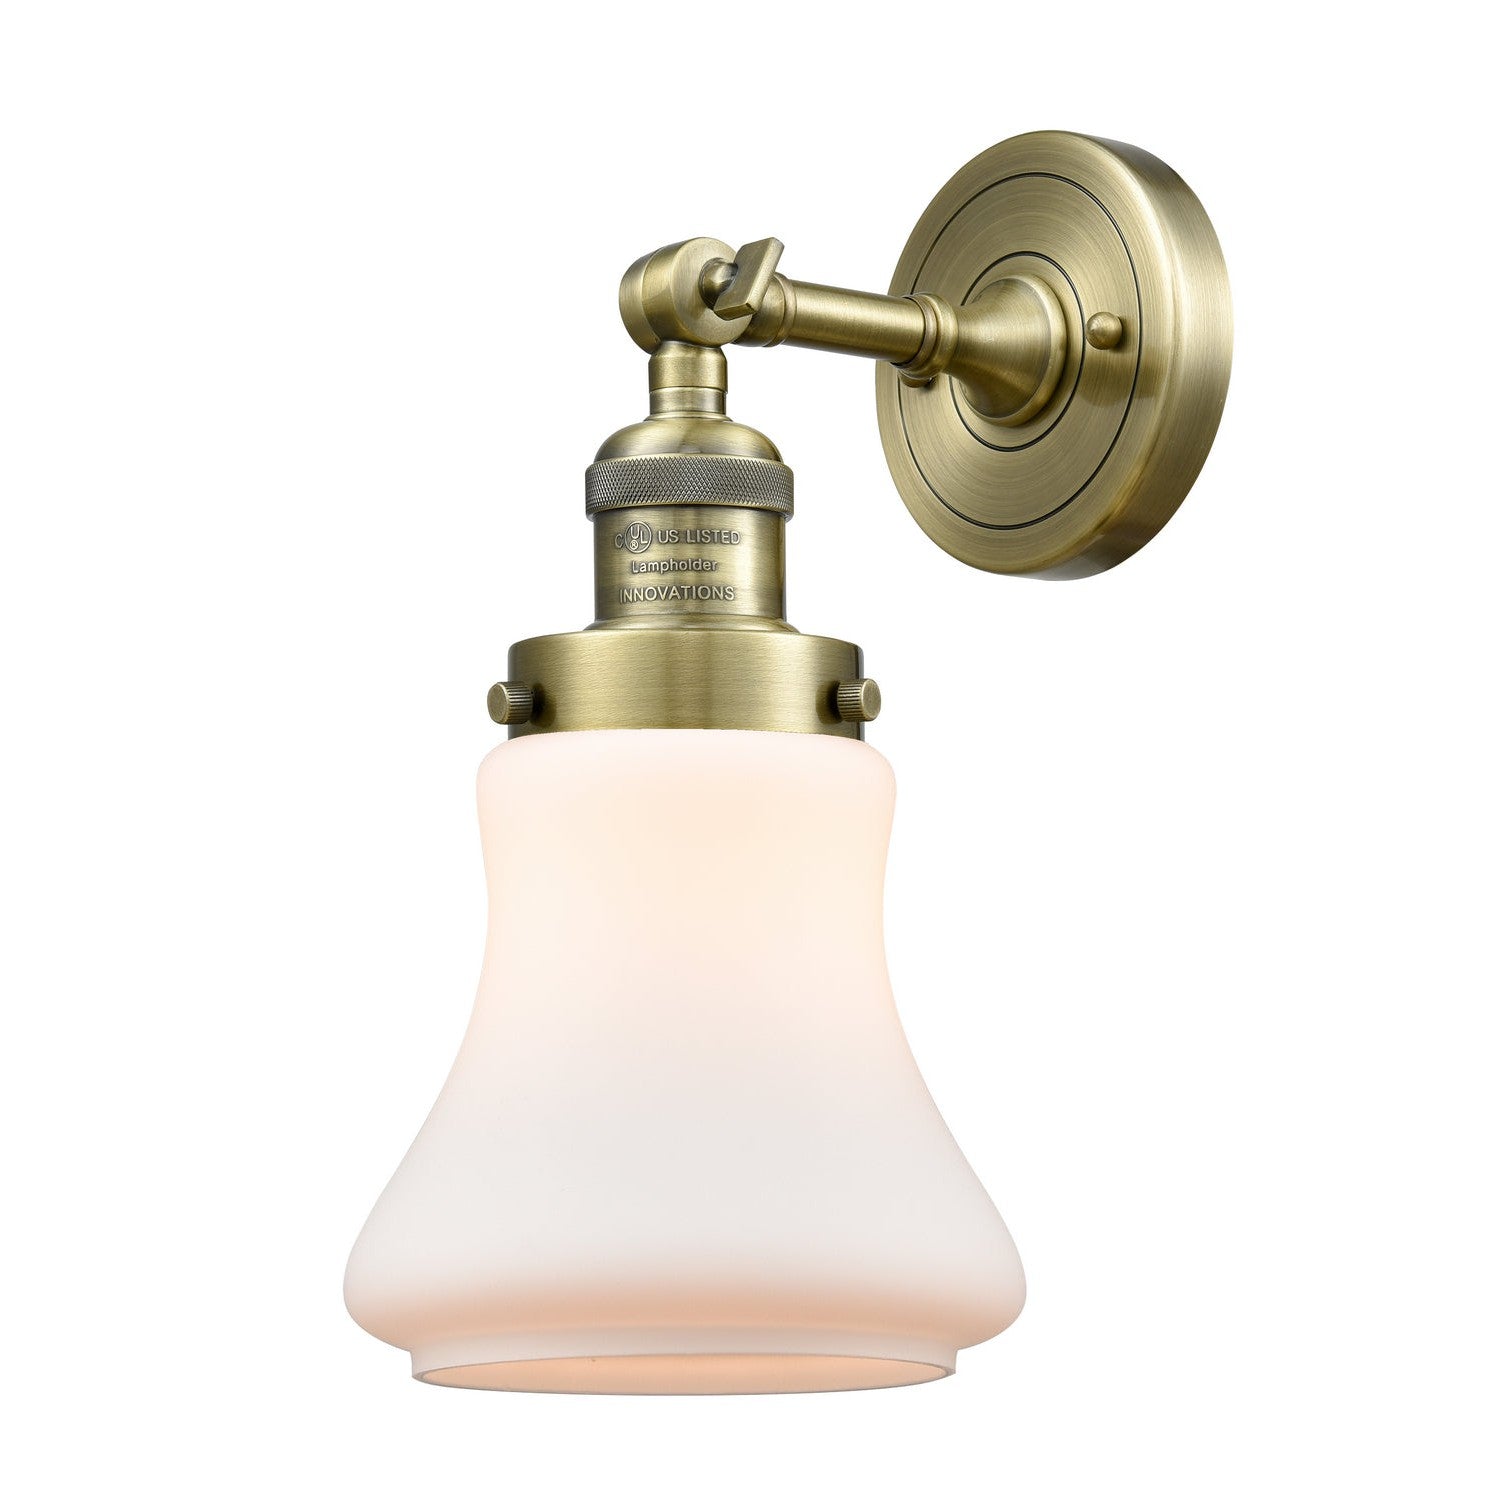 Innovations Franklin Restoration 203-AB-G191-LED Wall Sconce Light - Antique Brass